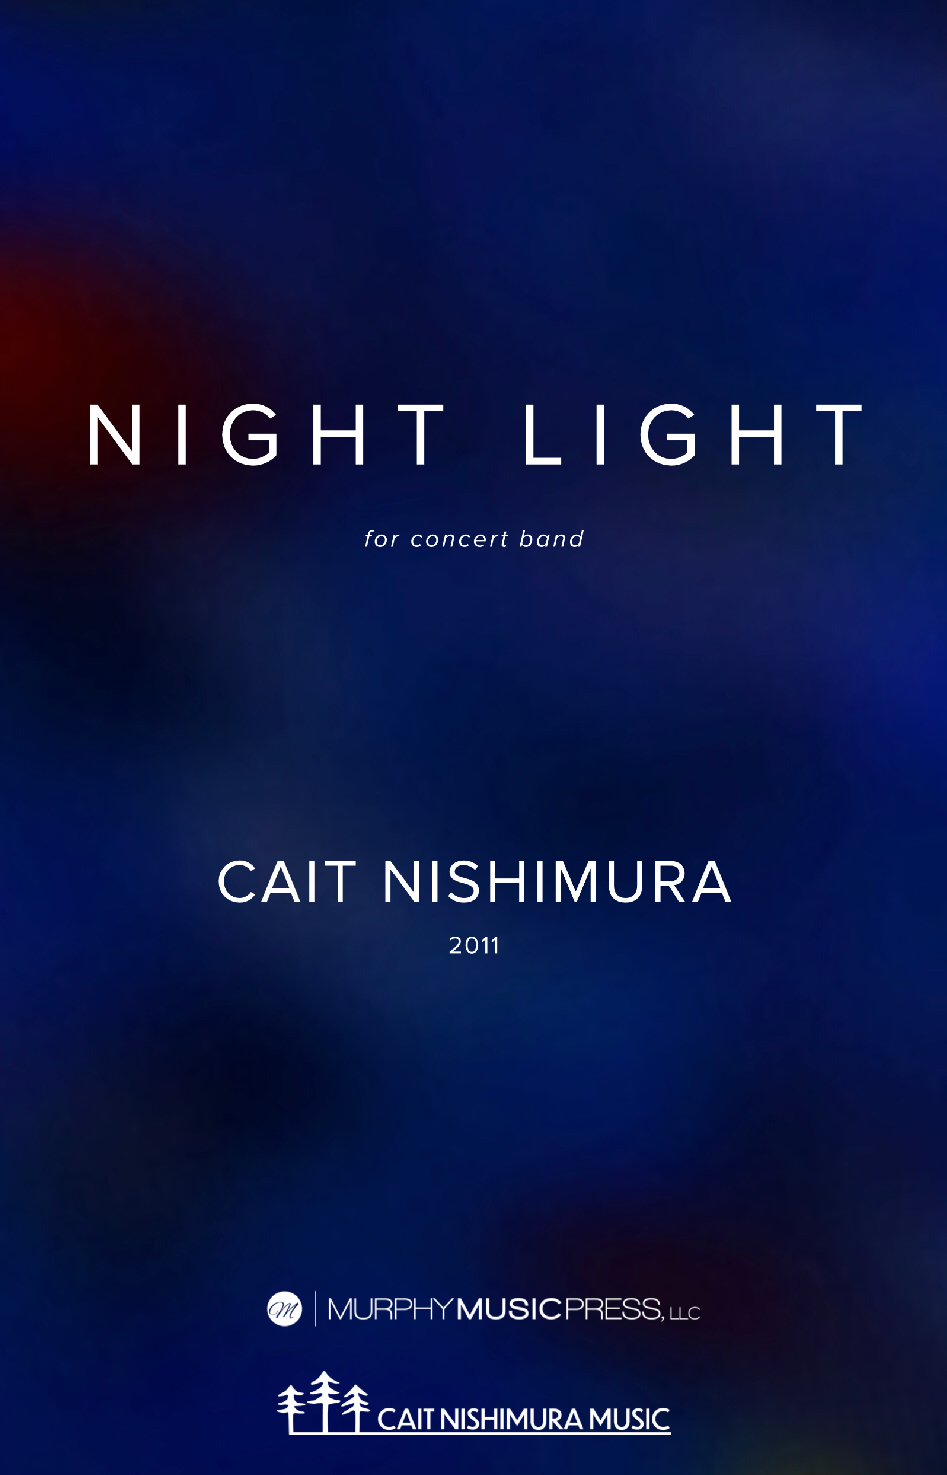 Nighlight by Cait Nishimura